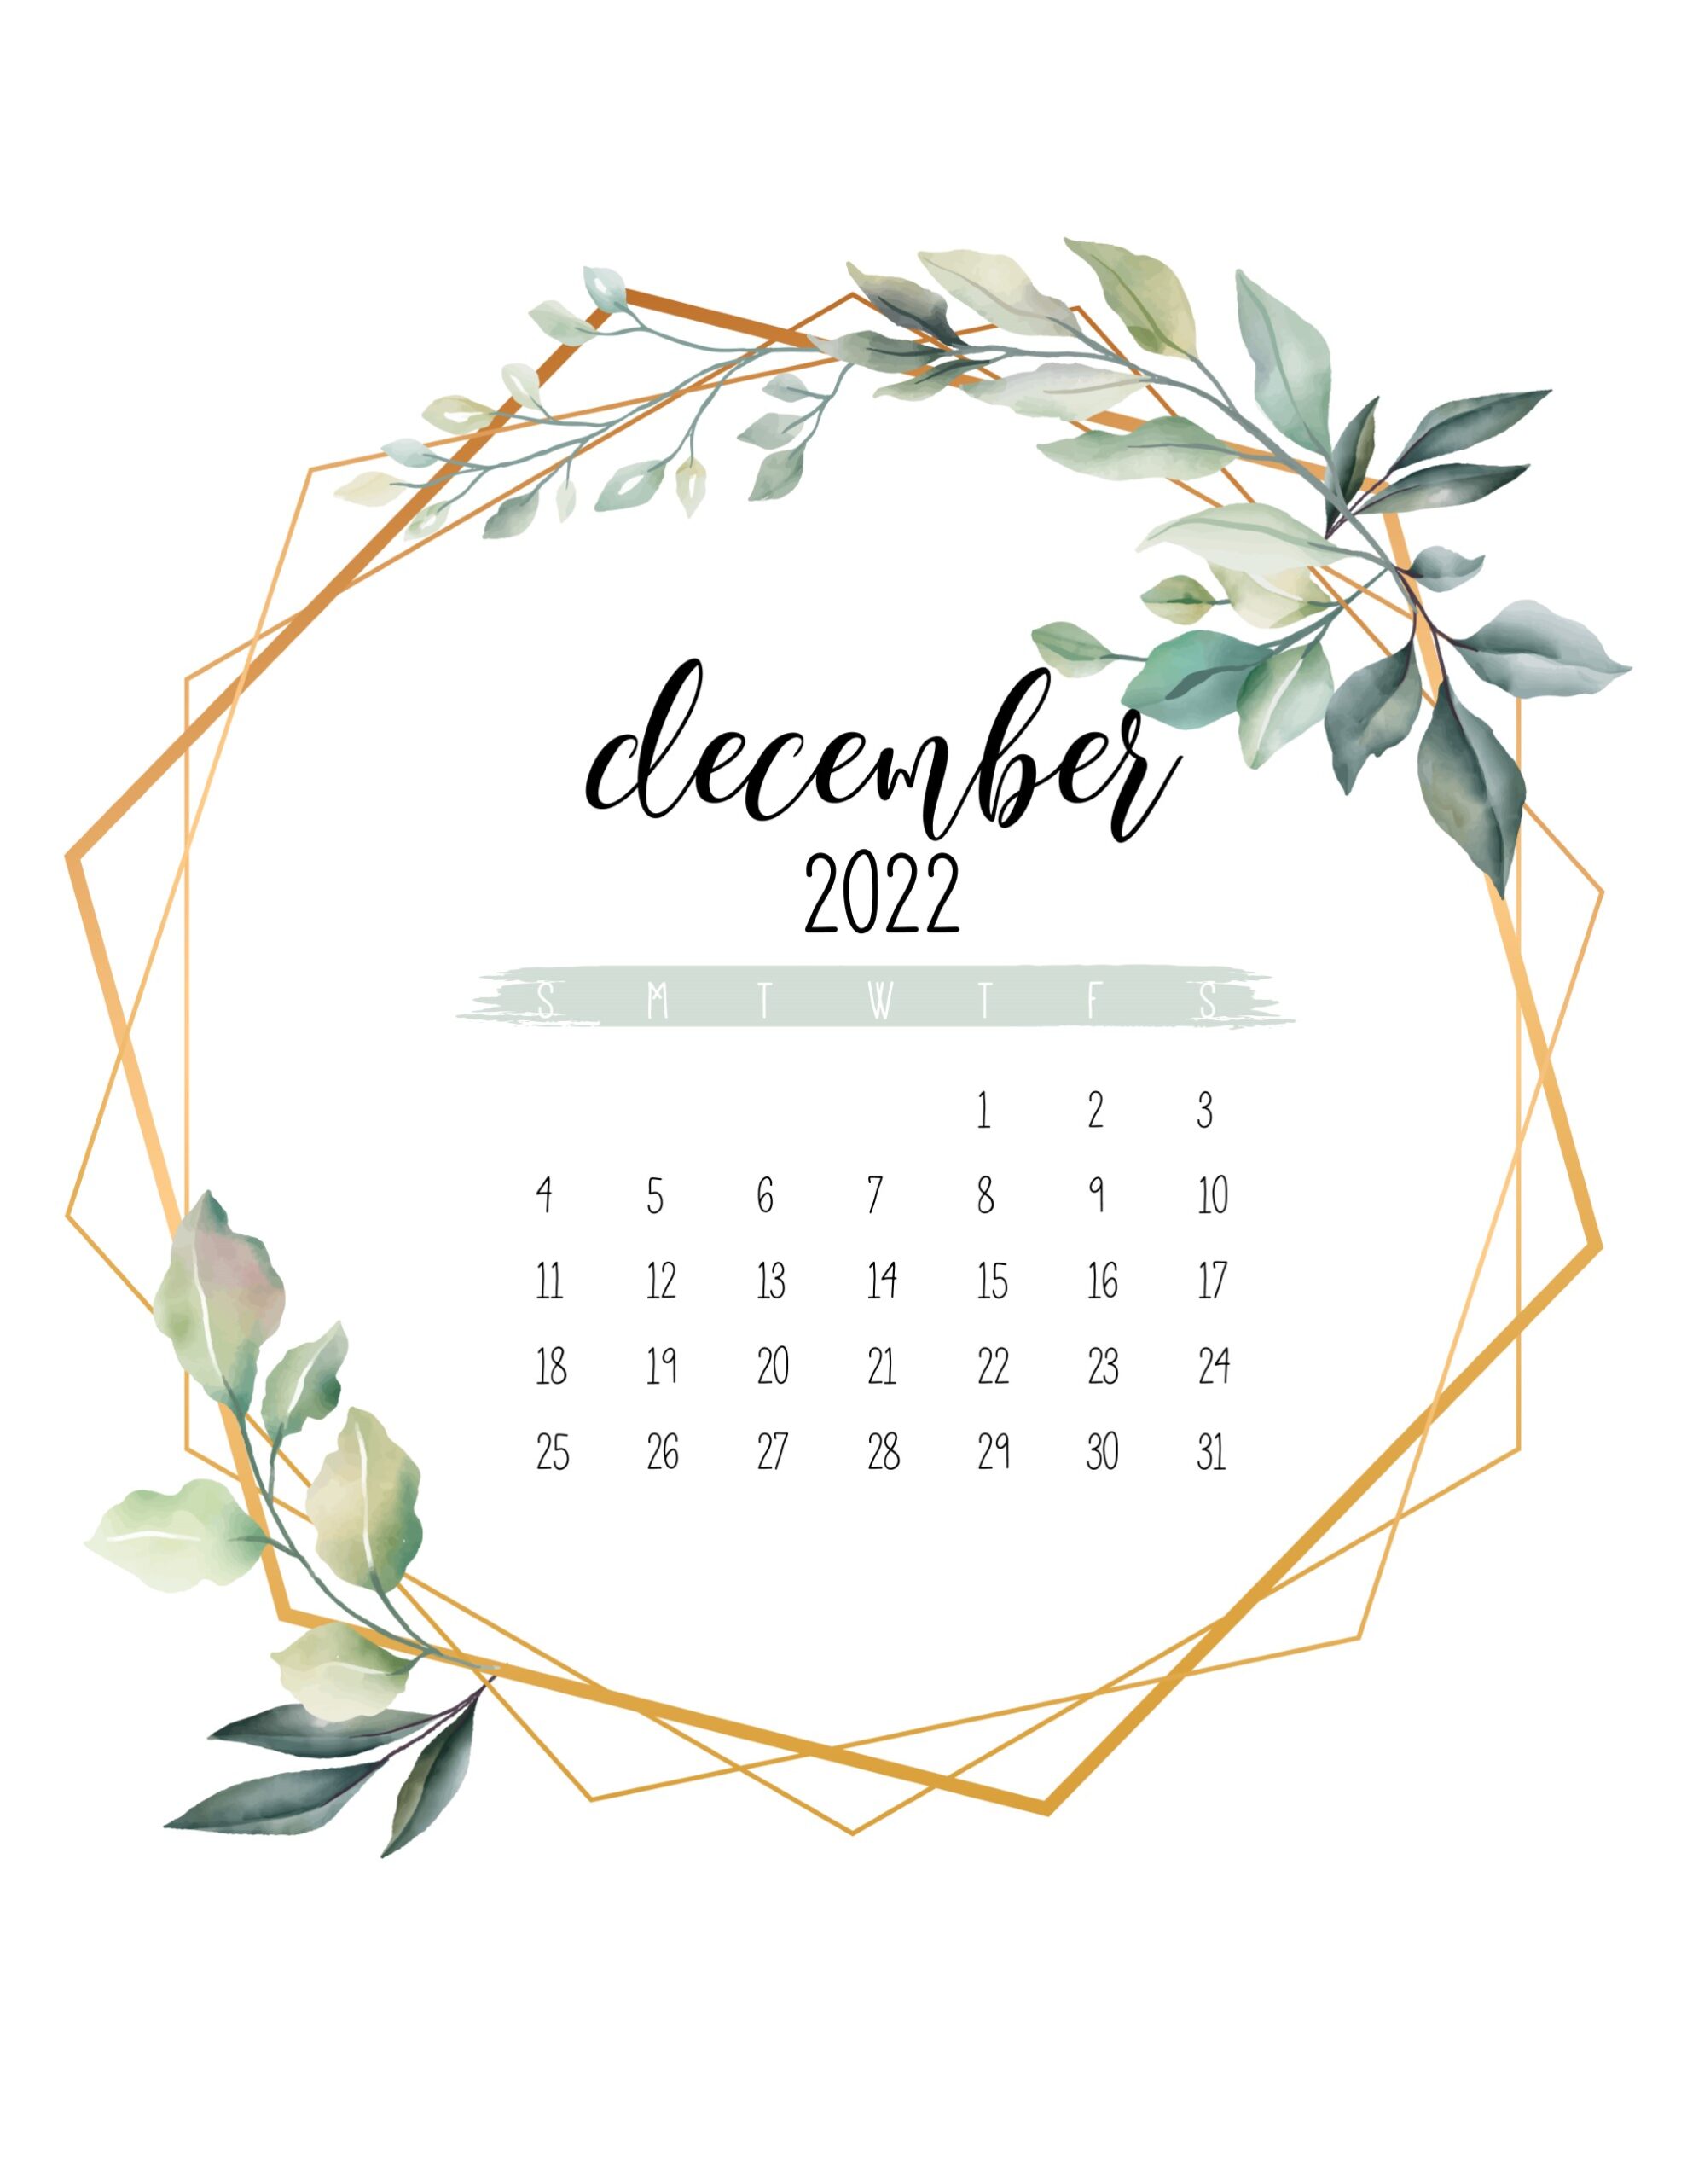 Calendario 2022 jardim botanico dezembro